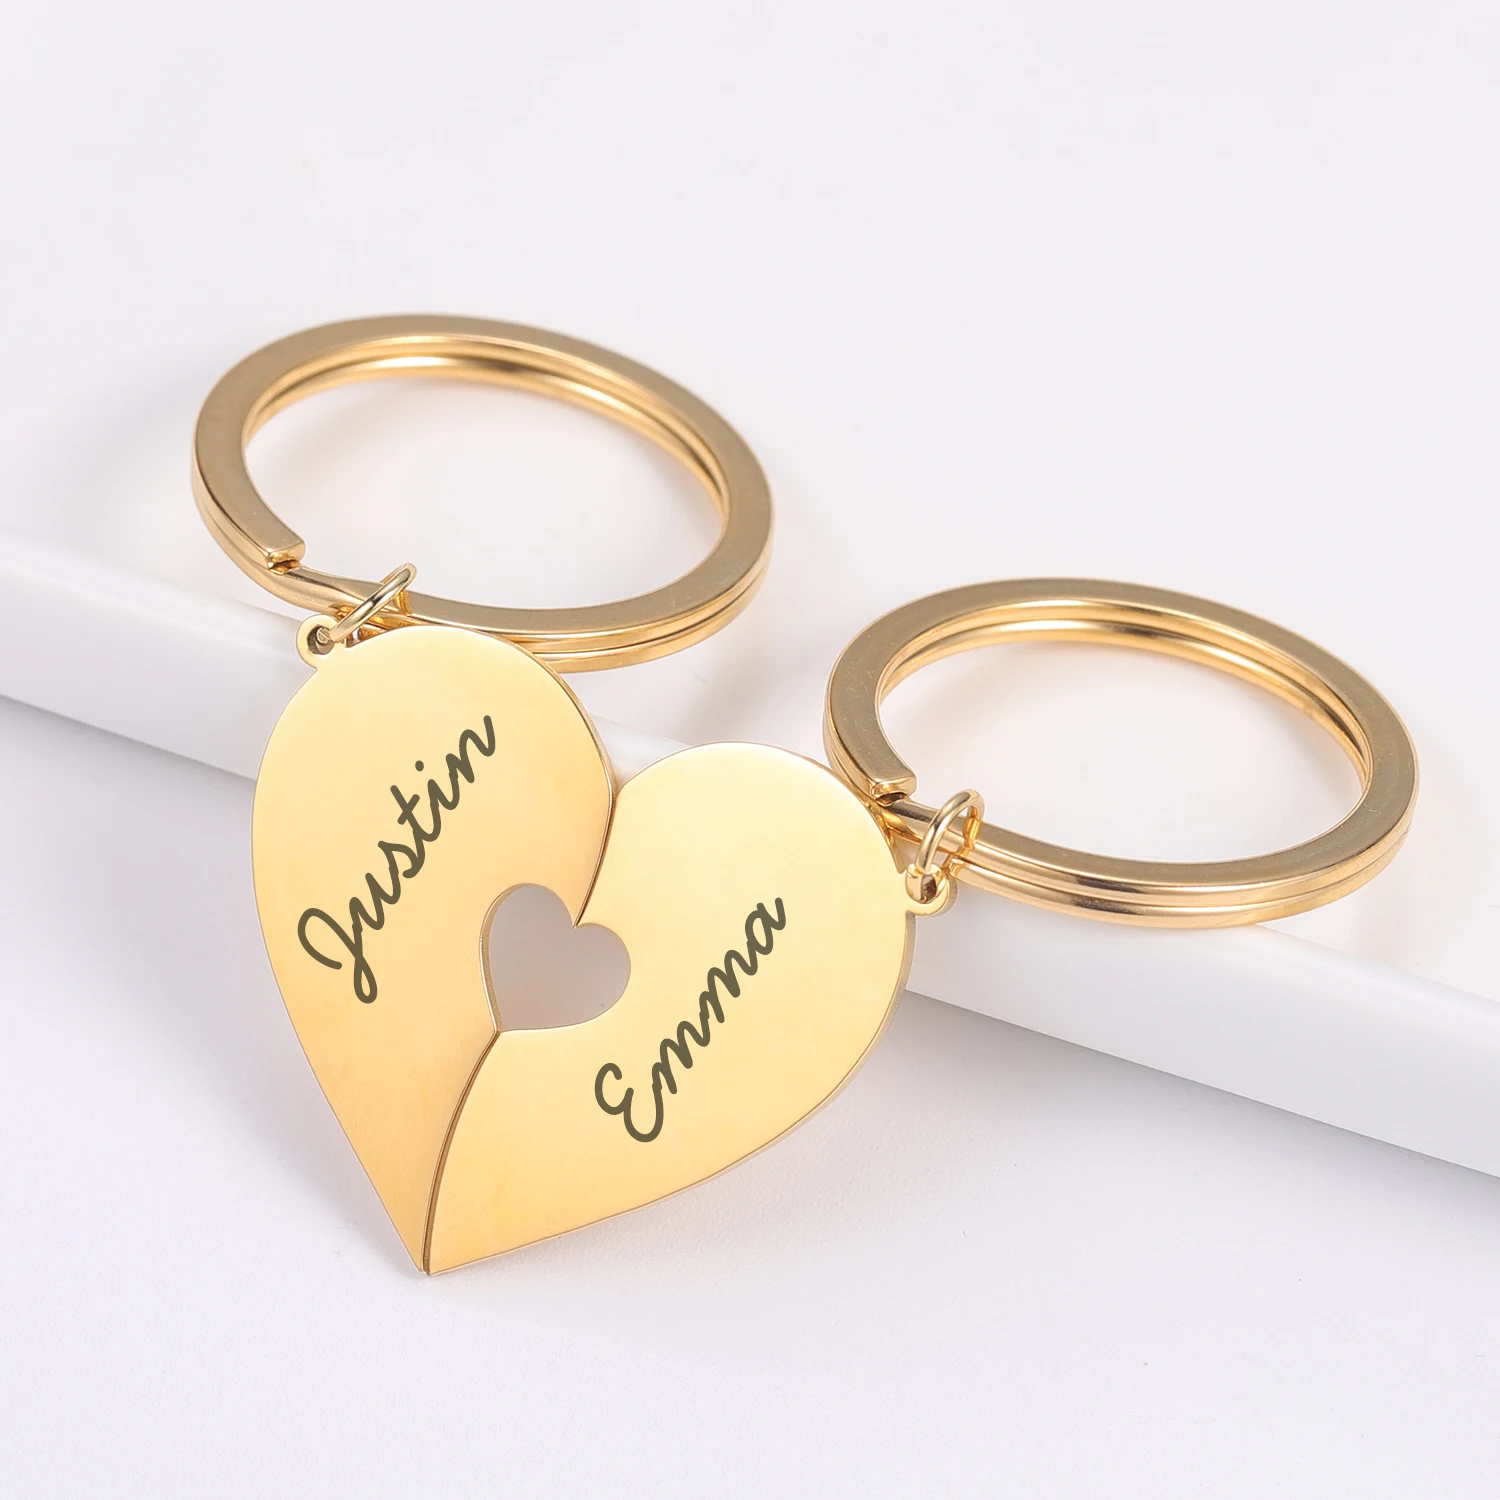 2Pcs Personalized Couples Keychain Valentine Anniversary Gift Boyfriend Girlfriend Heart KeyChain Man Women Key Chain Love Gifts